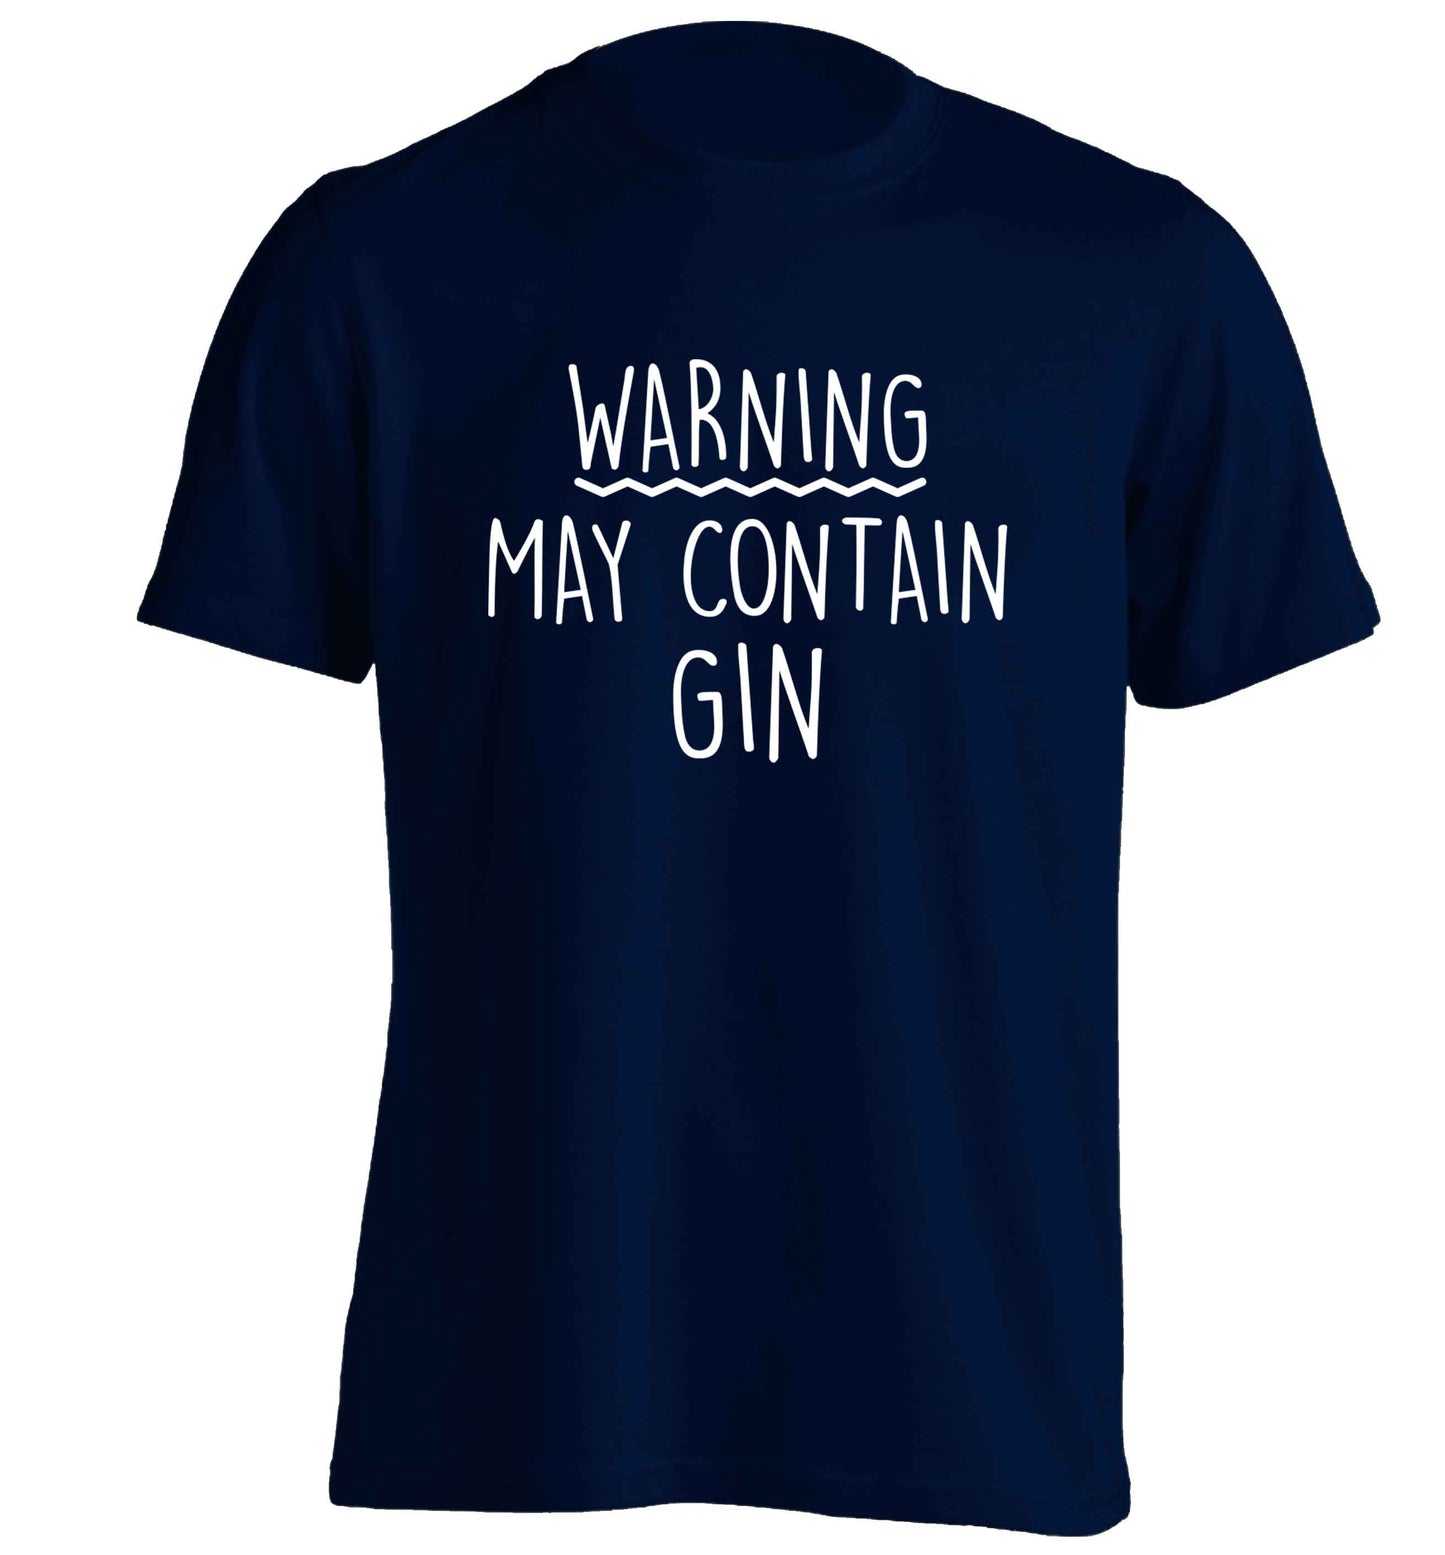 Warning may contain gin adults unisex navy Tshirt 2XL